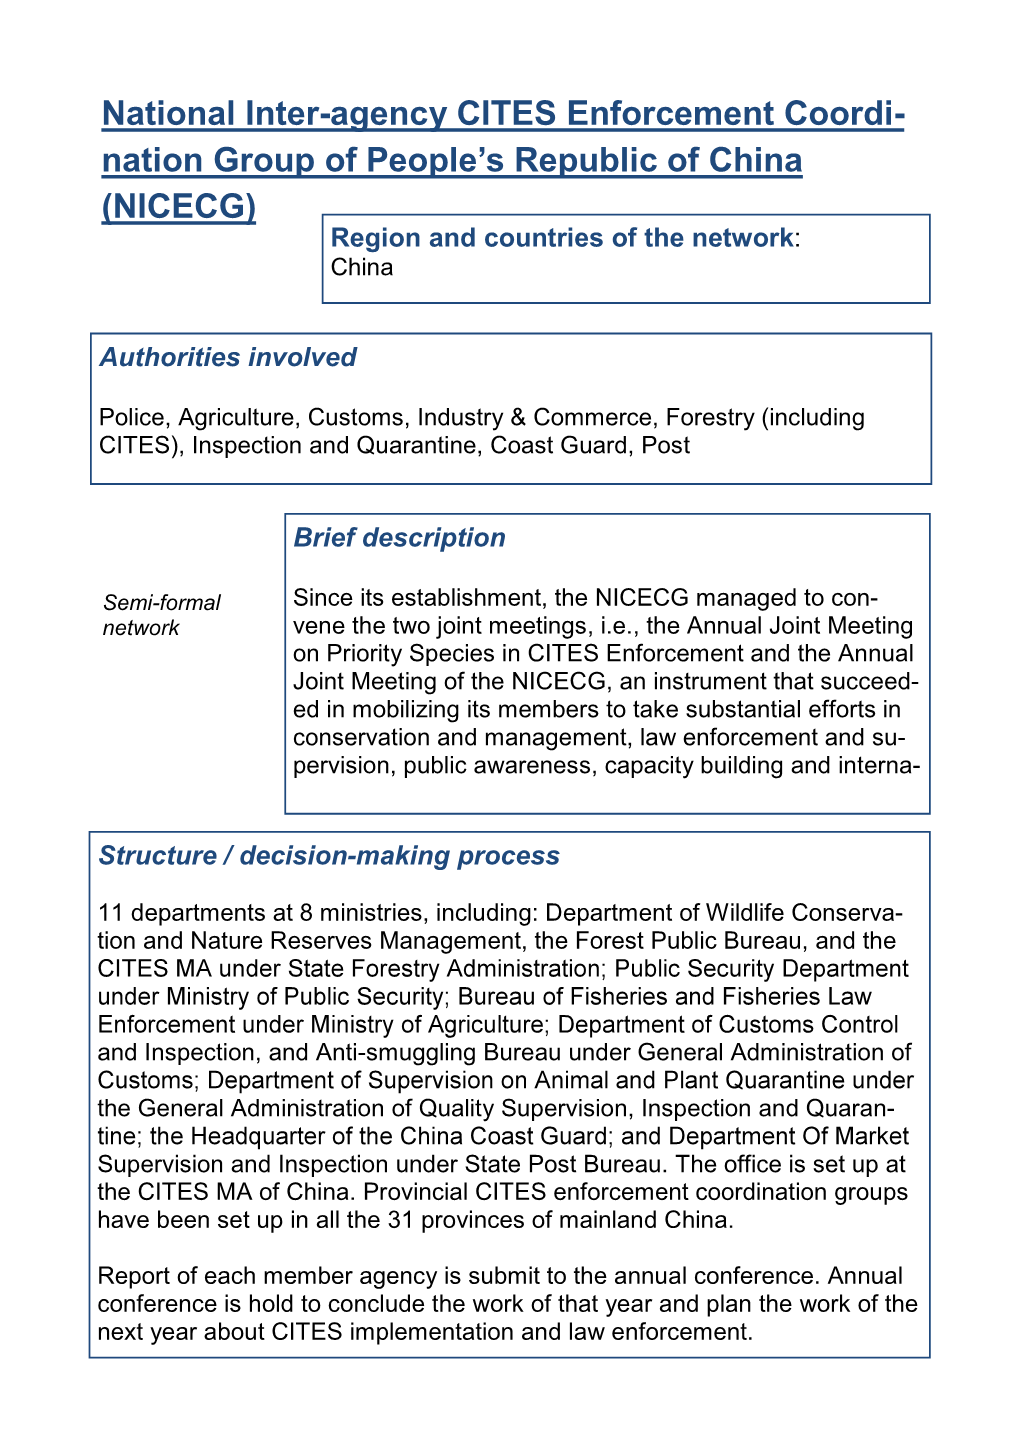 NICECG-CHINA Network INFO Sheet.Pub